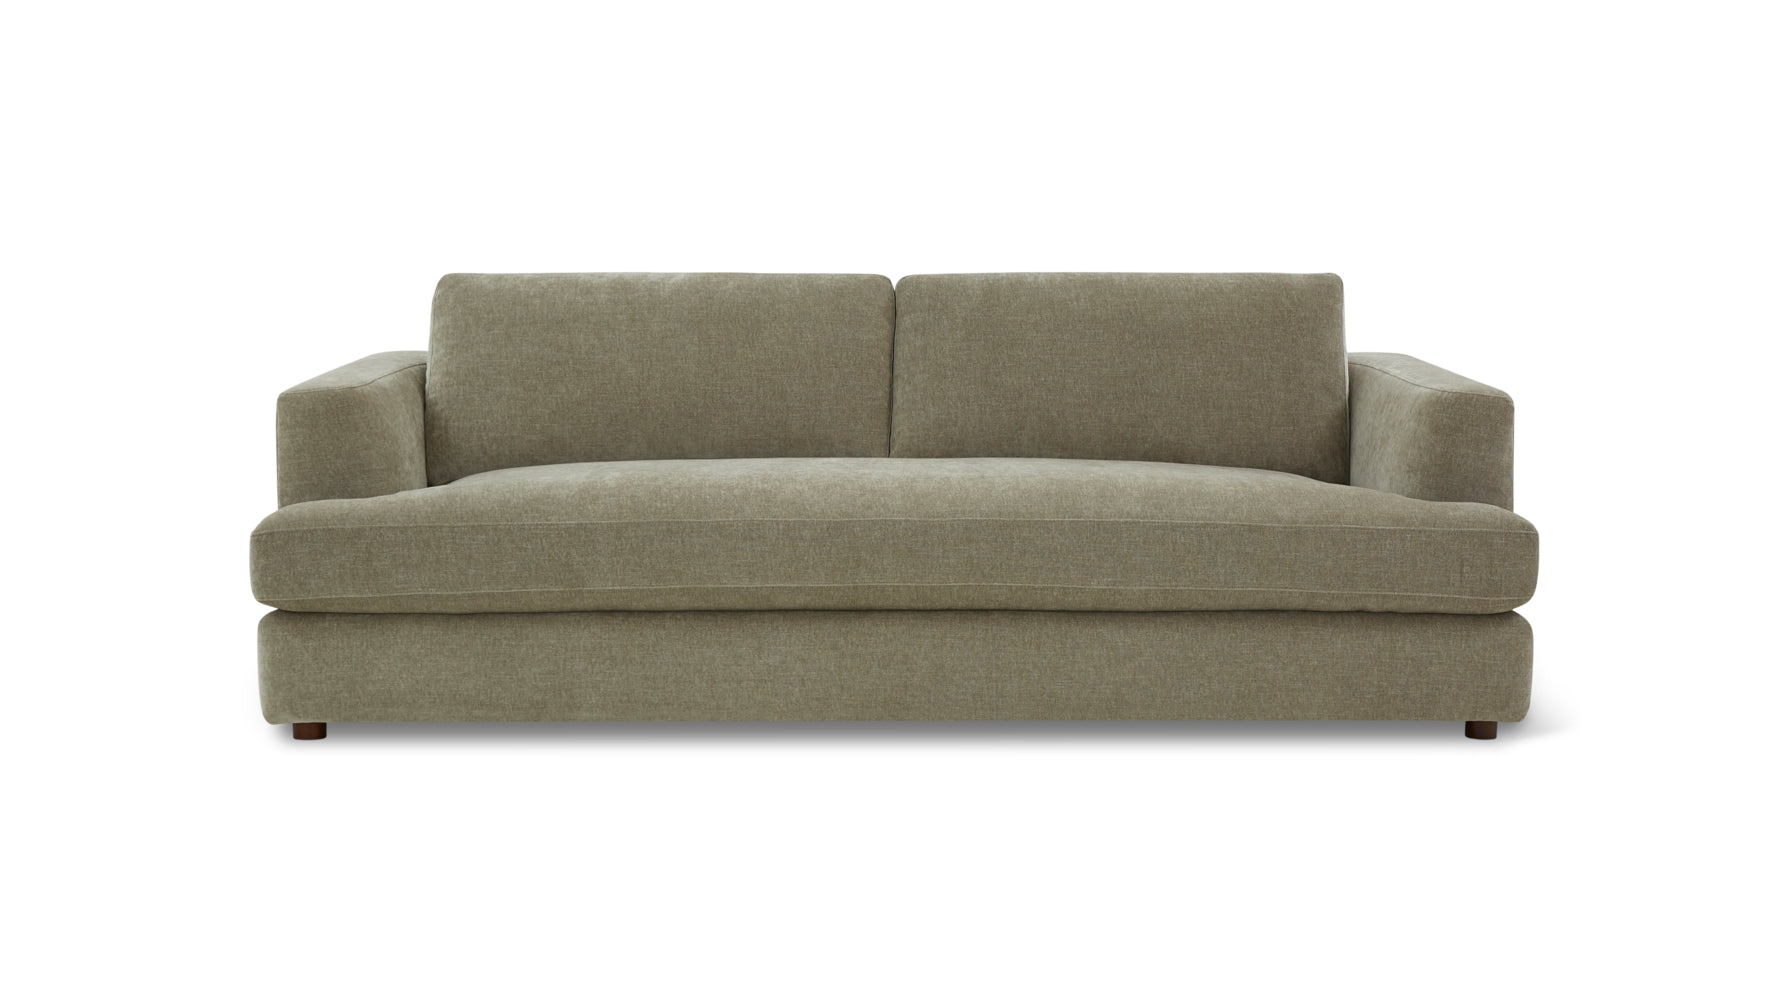 Good Company Sofa, 3 Seater, Artichoke - Image 1